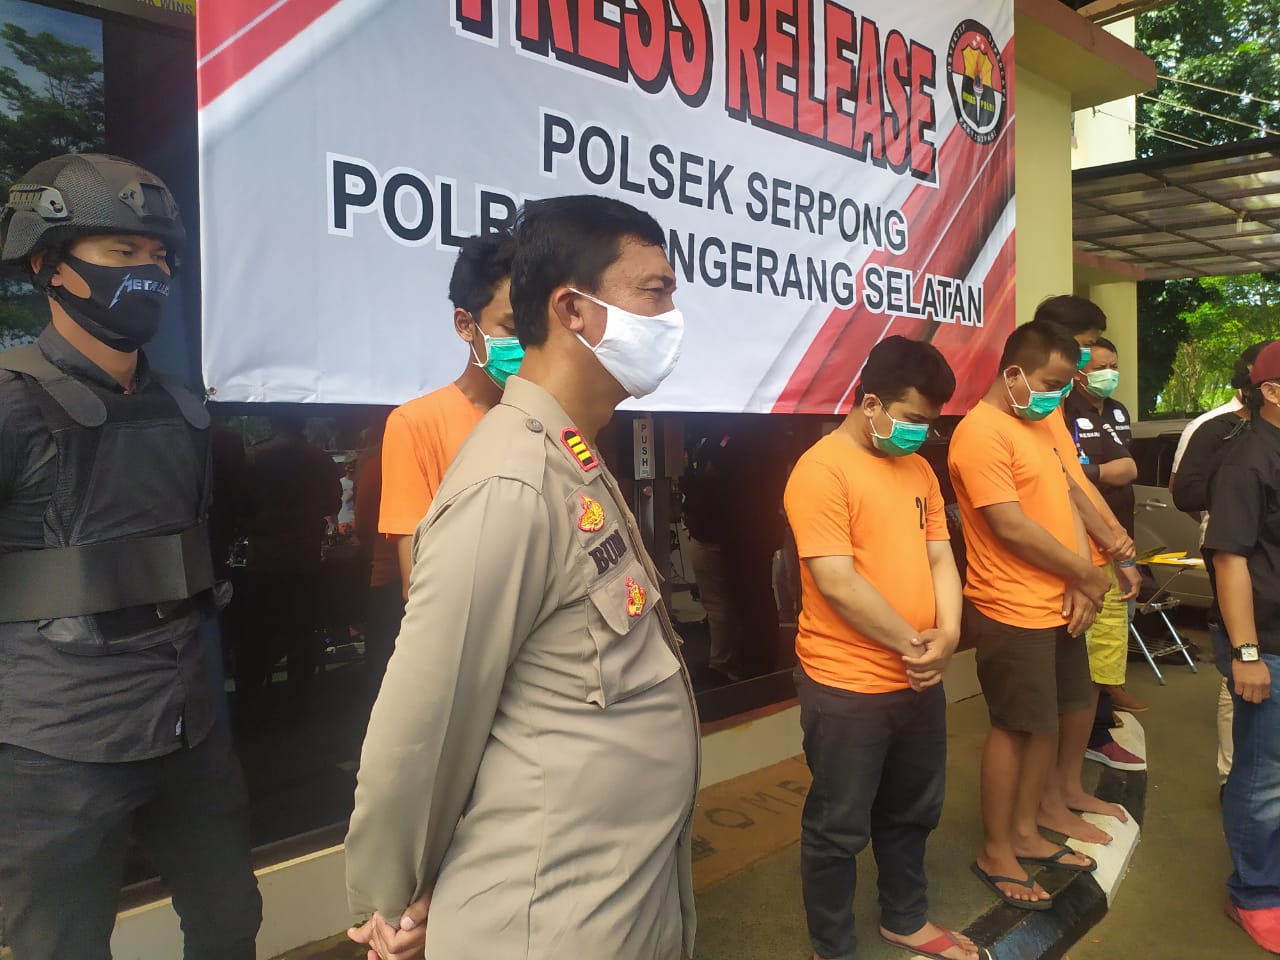 Angota Polsek Serpong dan TNI memegang barang bukti sperpat motor yang di gunakan saat balap liar, Serpong Utara, Tangerang Selatan, Kamis (21/5/2020).